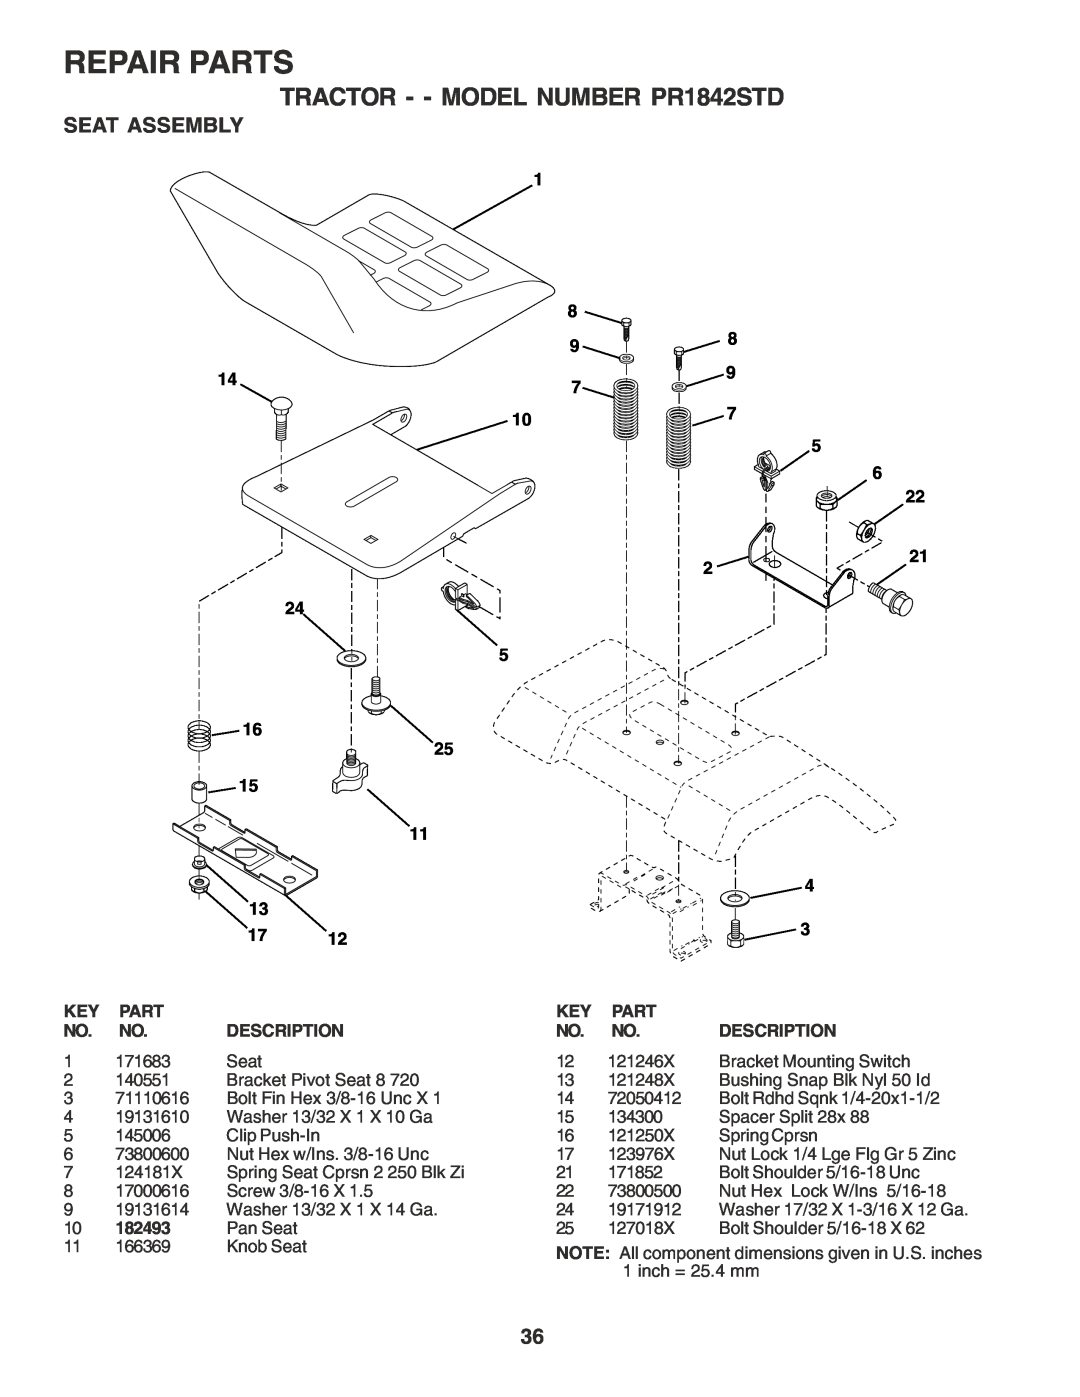 Poulan owner manual Seat Assembly, Repair Parts, TRACTOR - - MODEL NUMBER PR1842STD, Description, 182493 